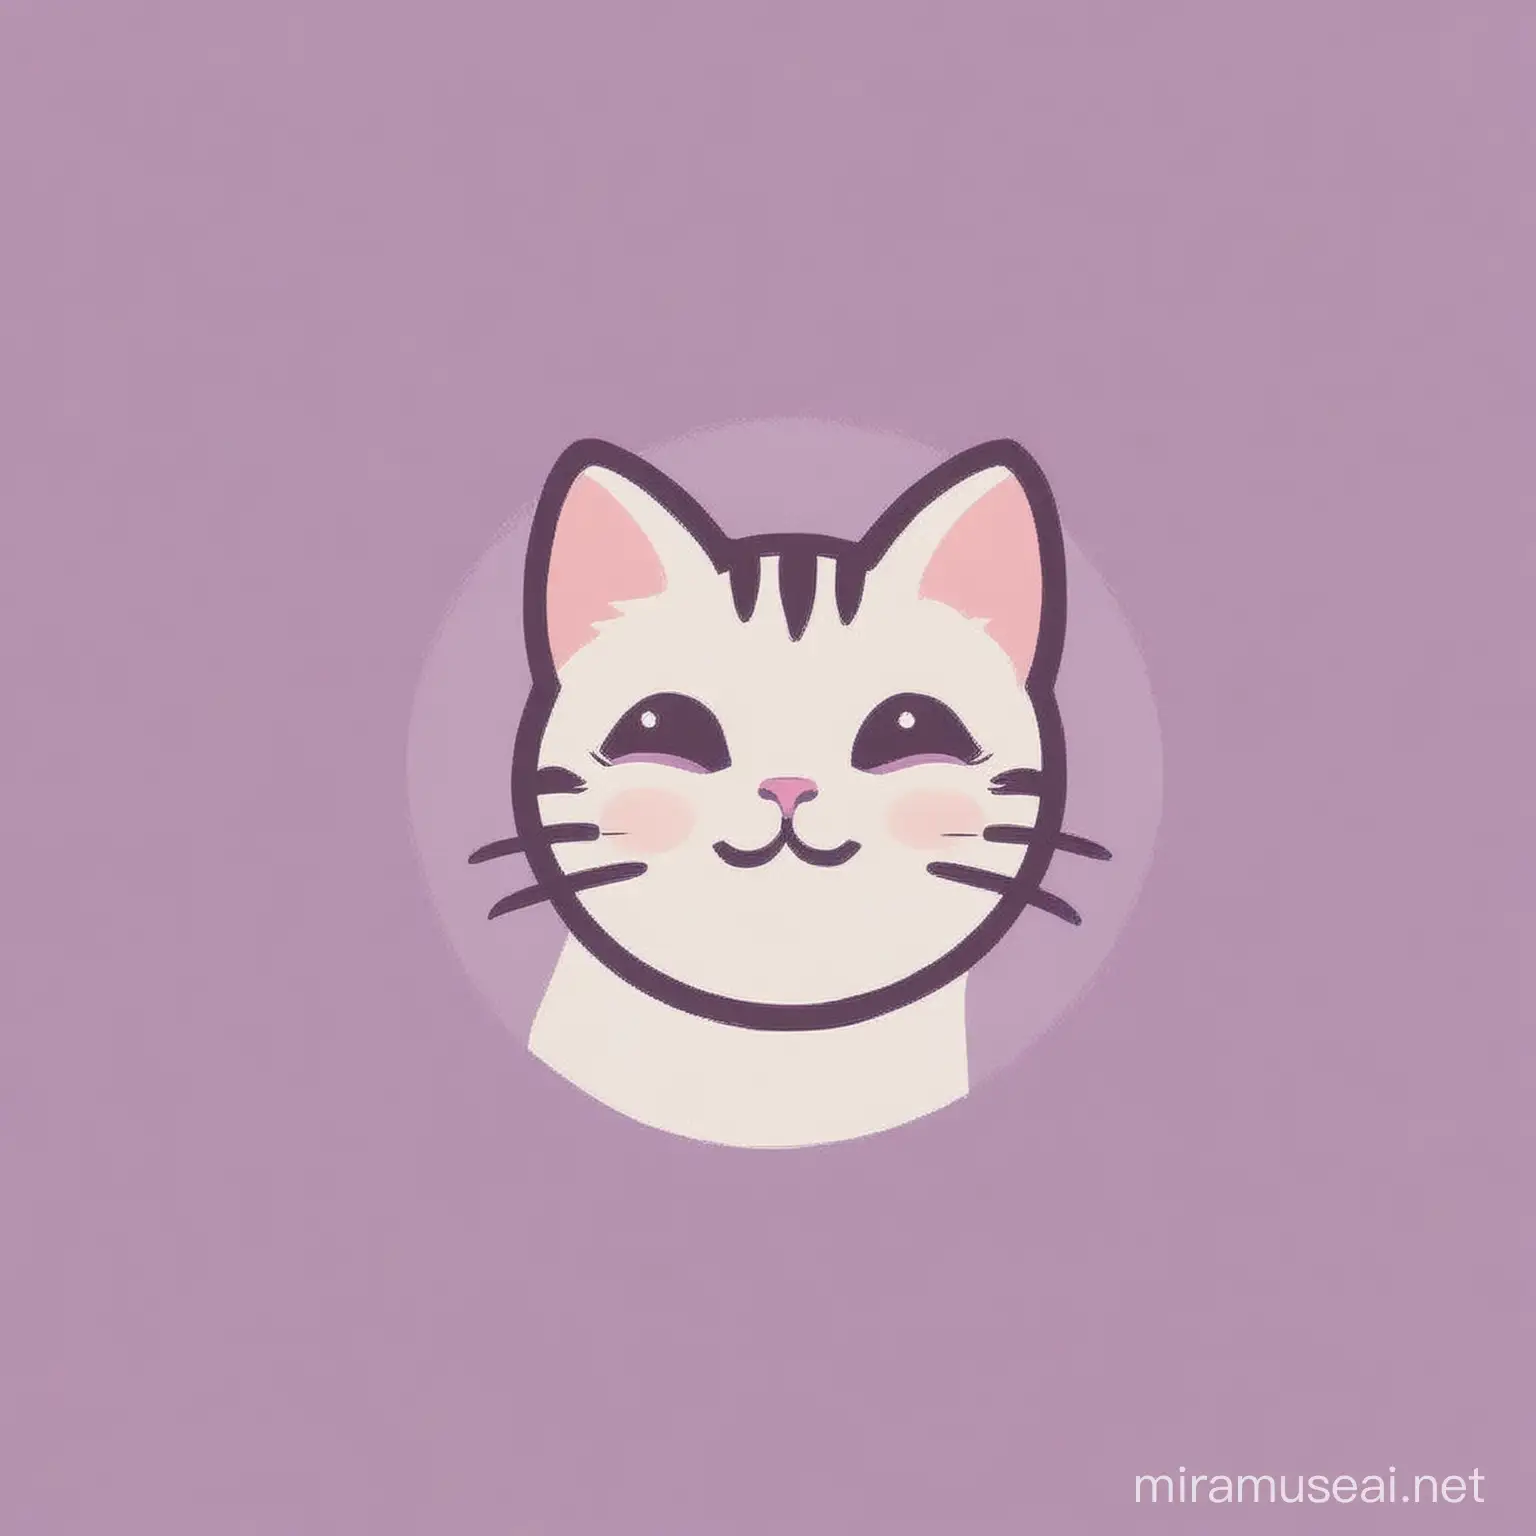 cat in good mood minimalistic logo light purple background